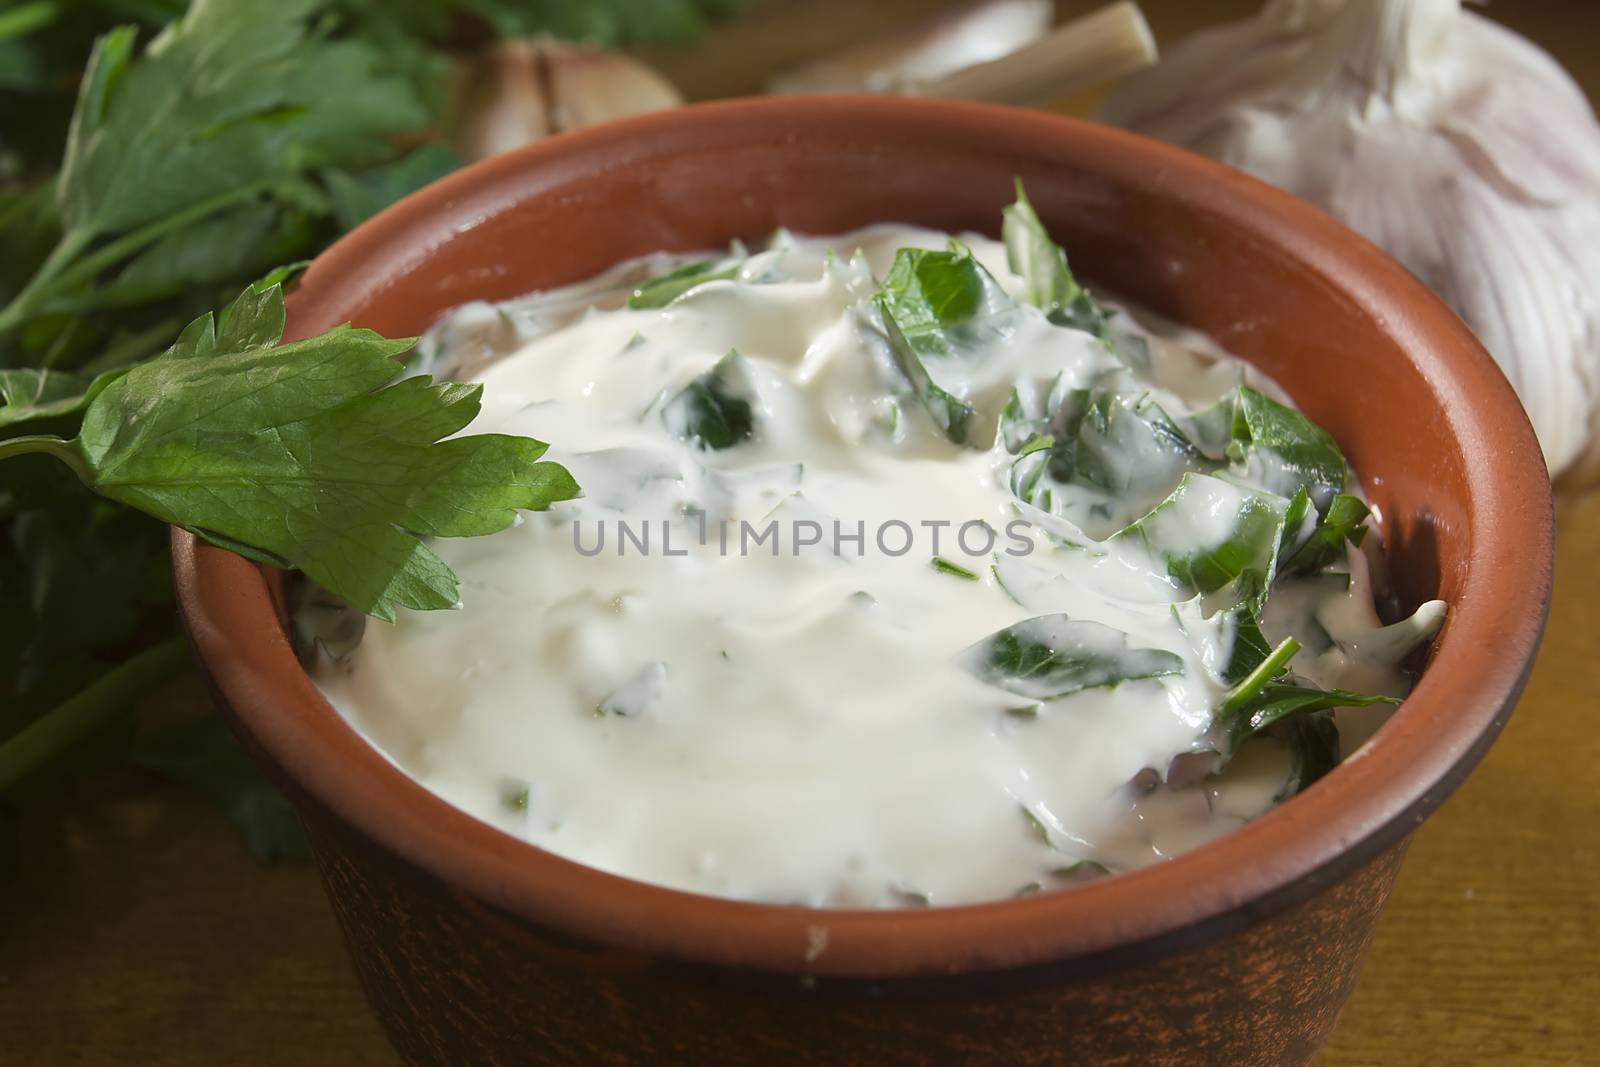 Garlic dip sauce with fresh green parsley leaves